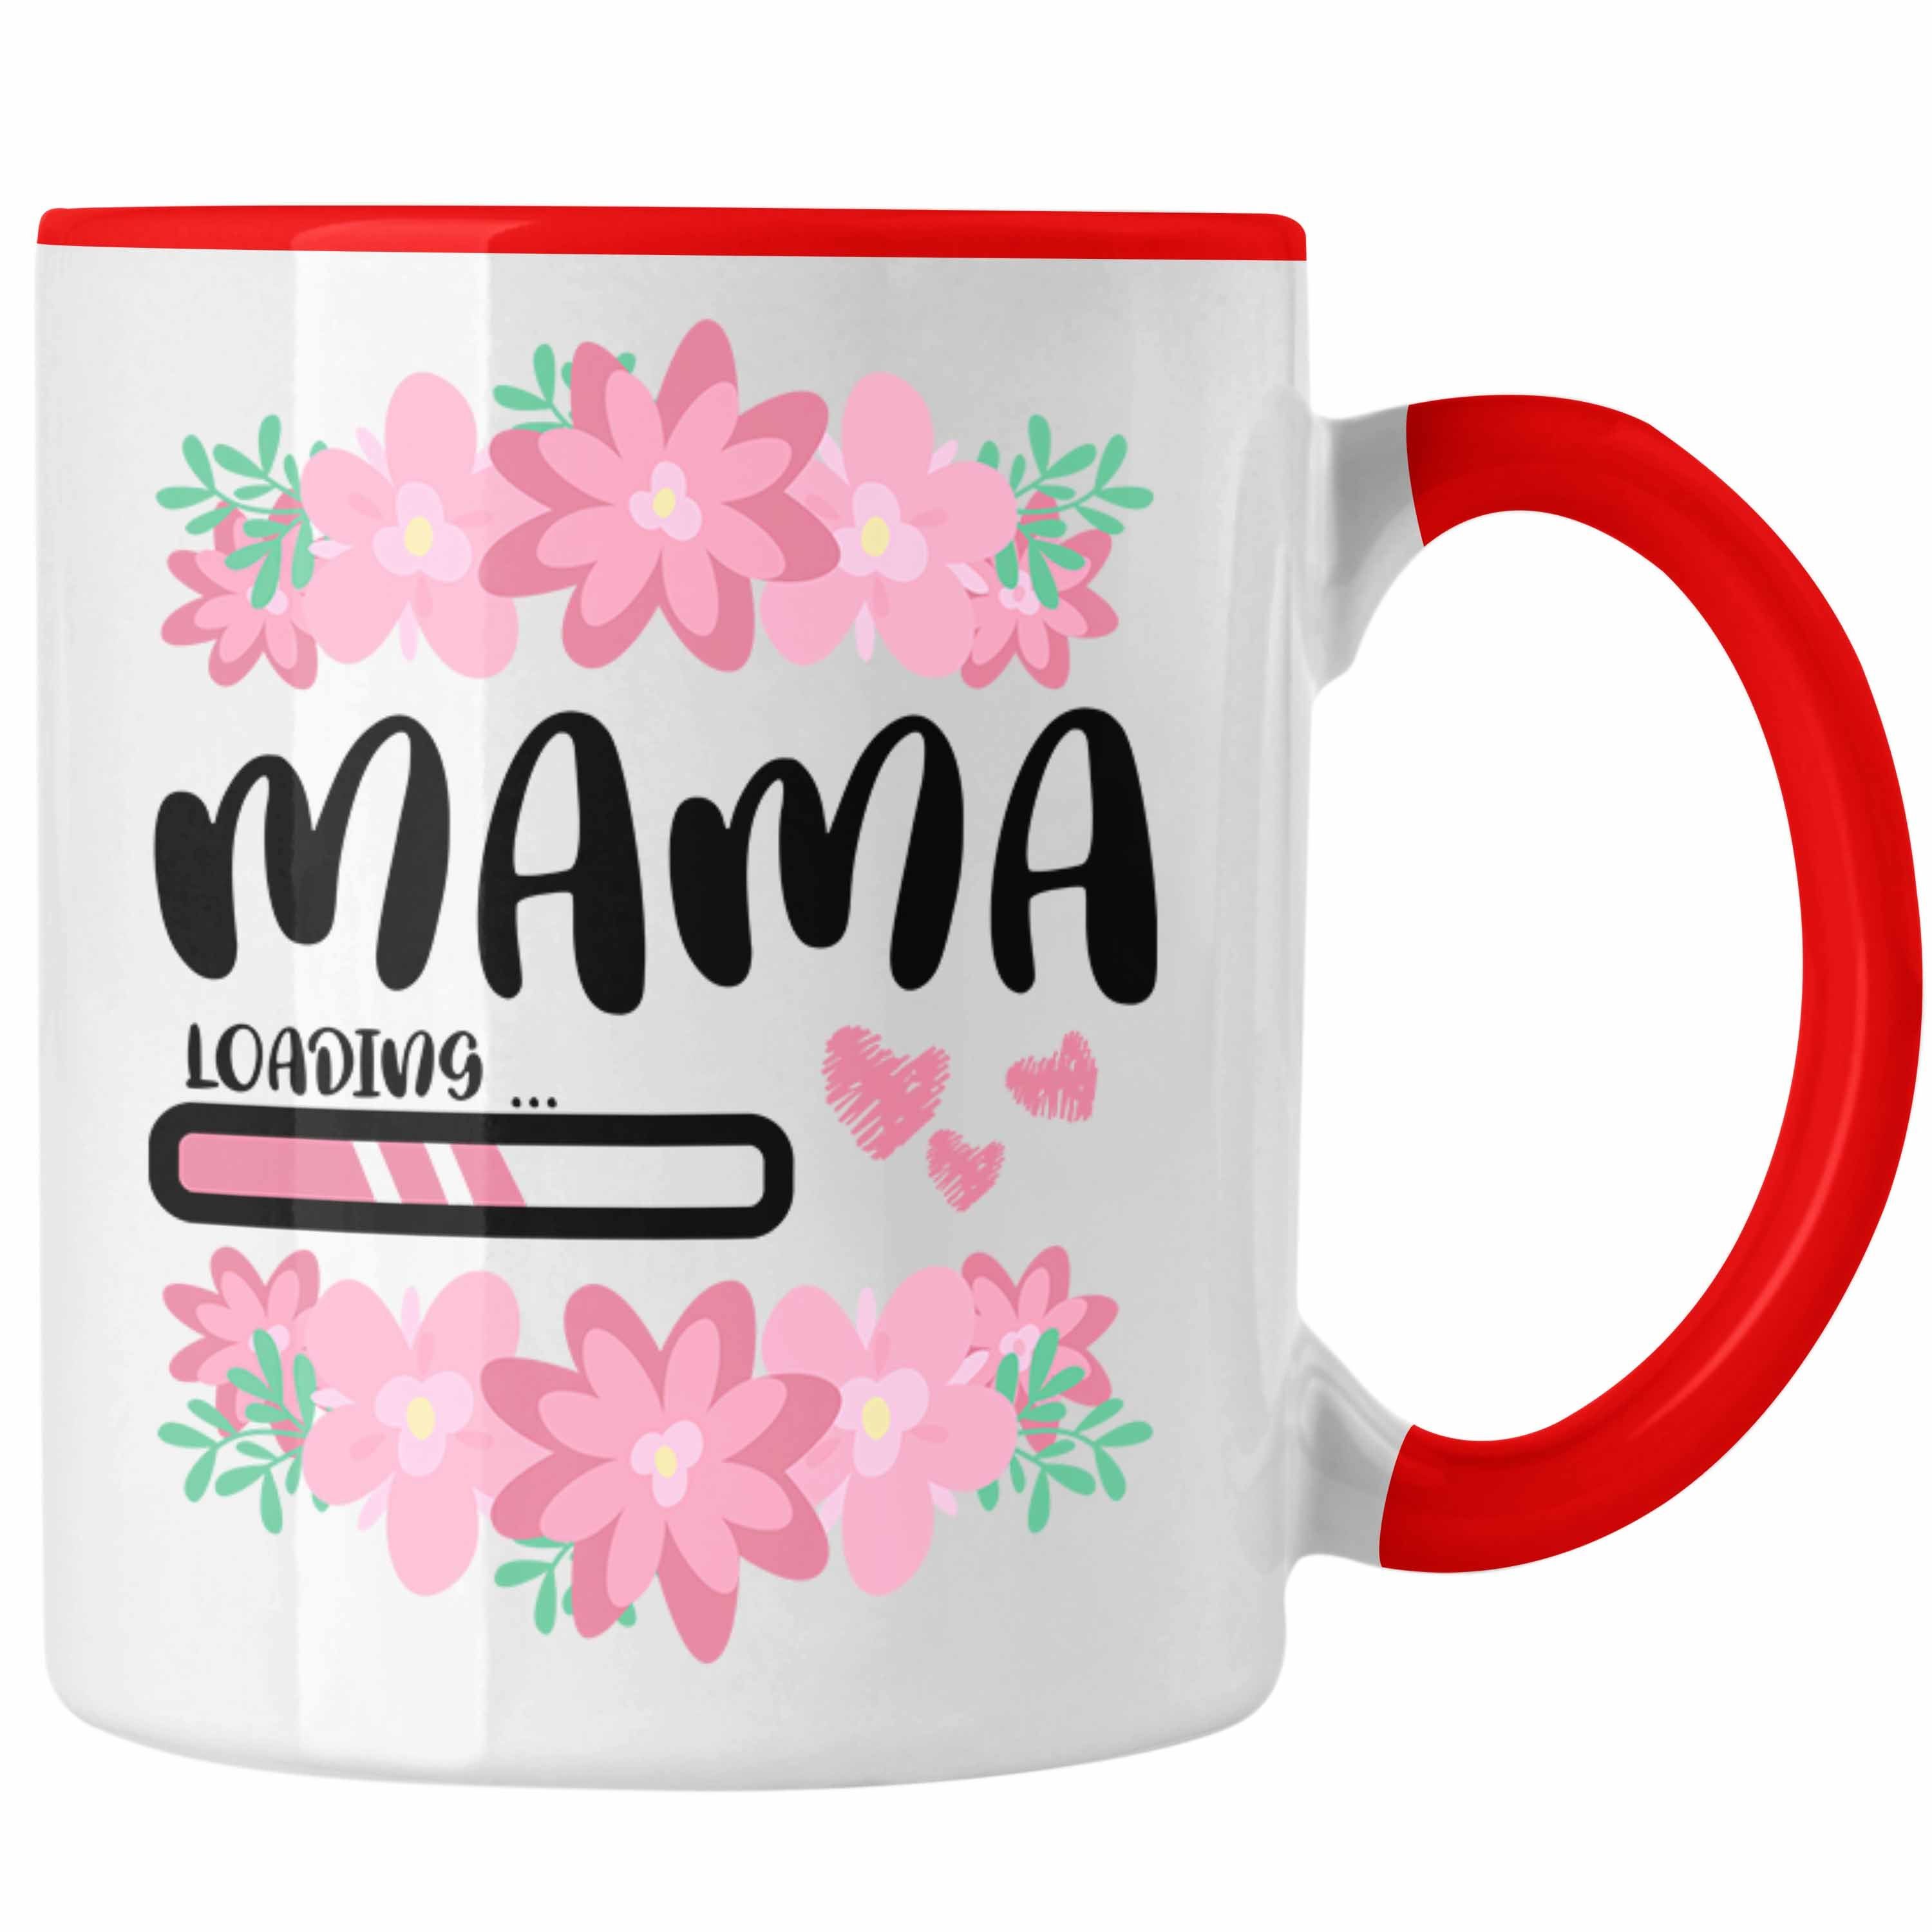 Trendation Tasse Trendation - Mama Loading Tasse Rosa Geschenk Schwangerschaft Baby Kaffeetasse Schwangerschaftsankündigung Rot